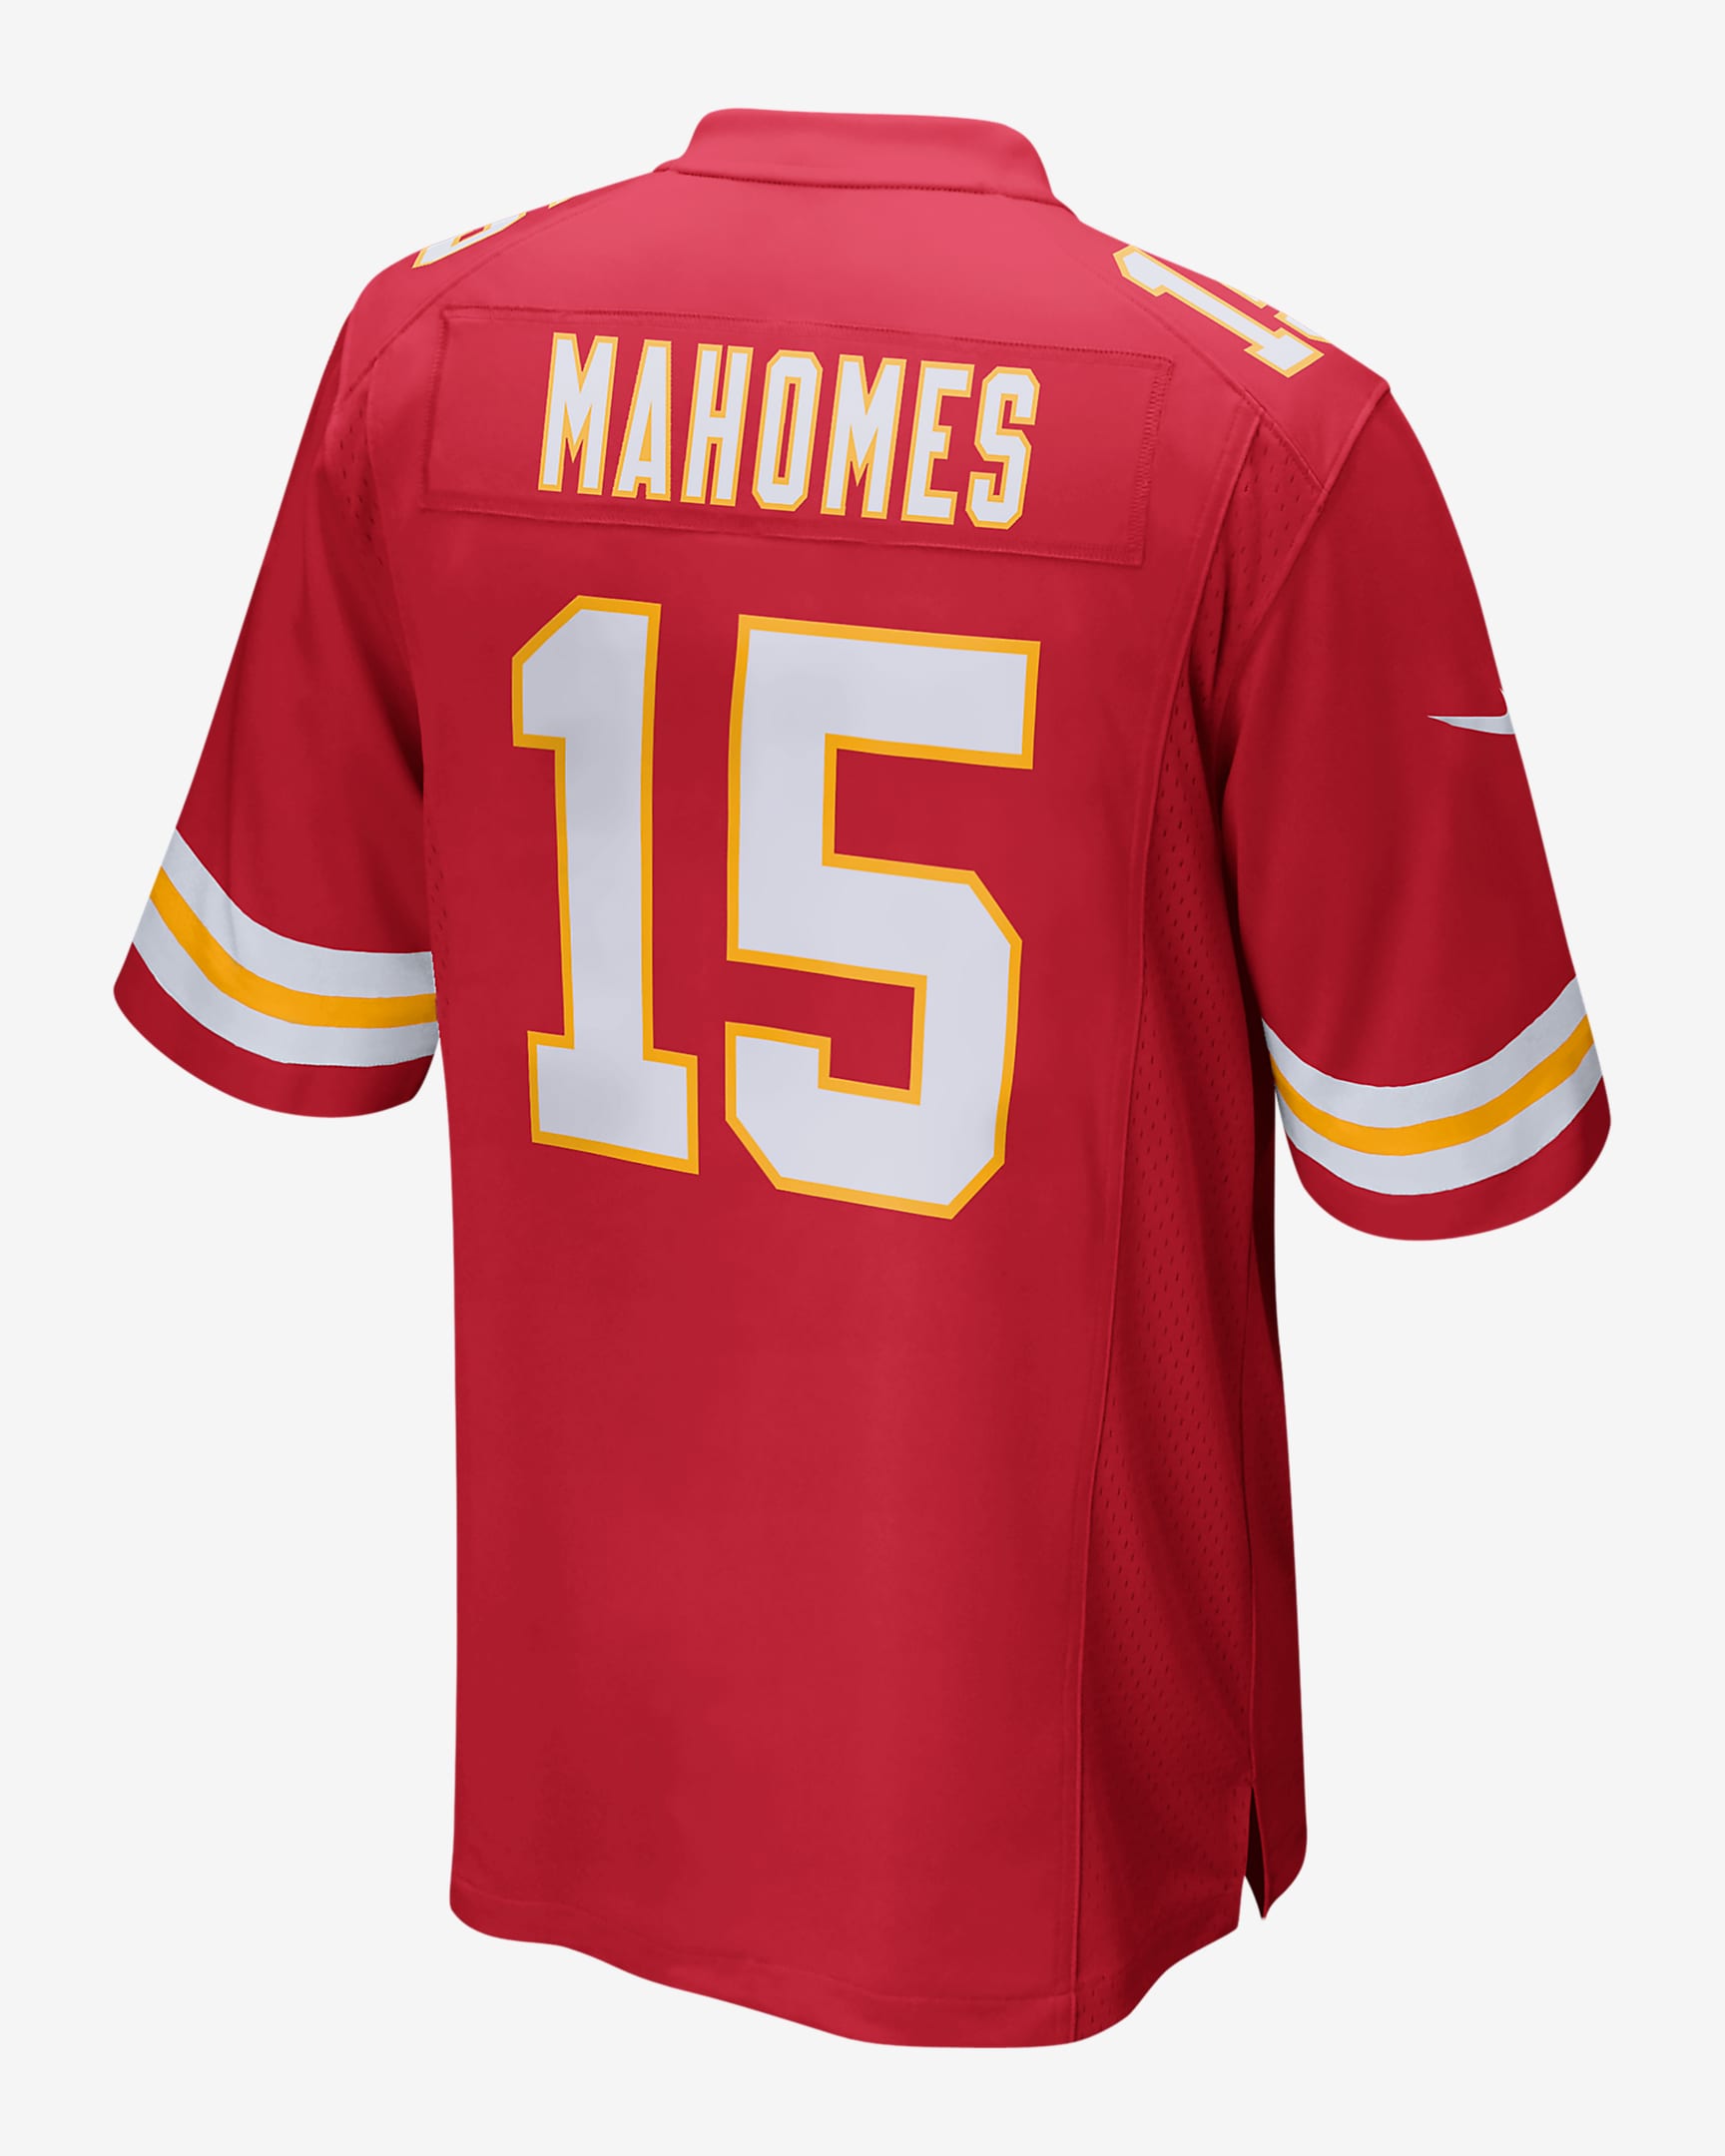 NFL Kansas City Chiefs (Patrick Mahomes) American-Football-Spieltrikot für Herren - University Red